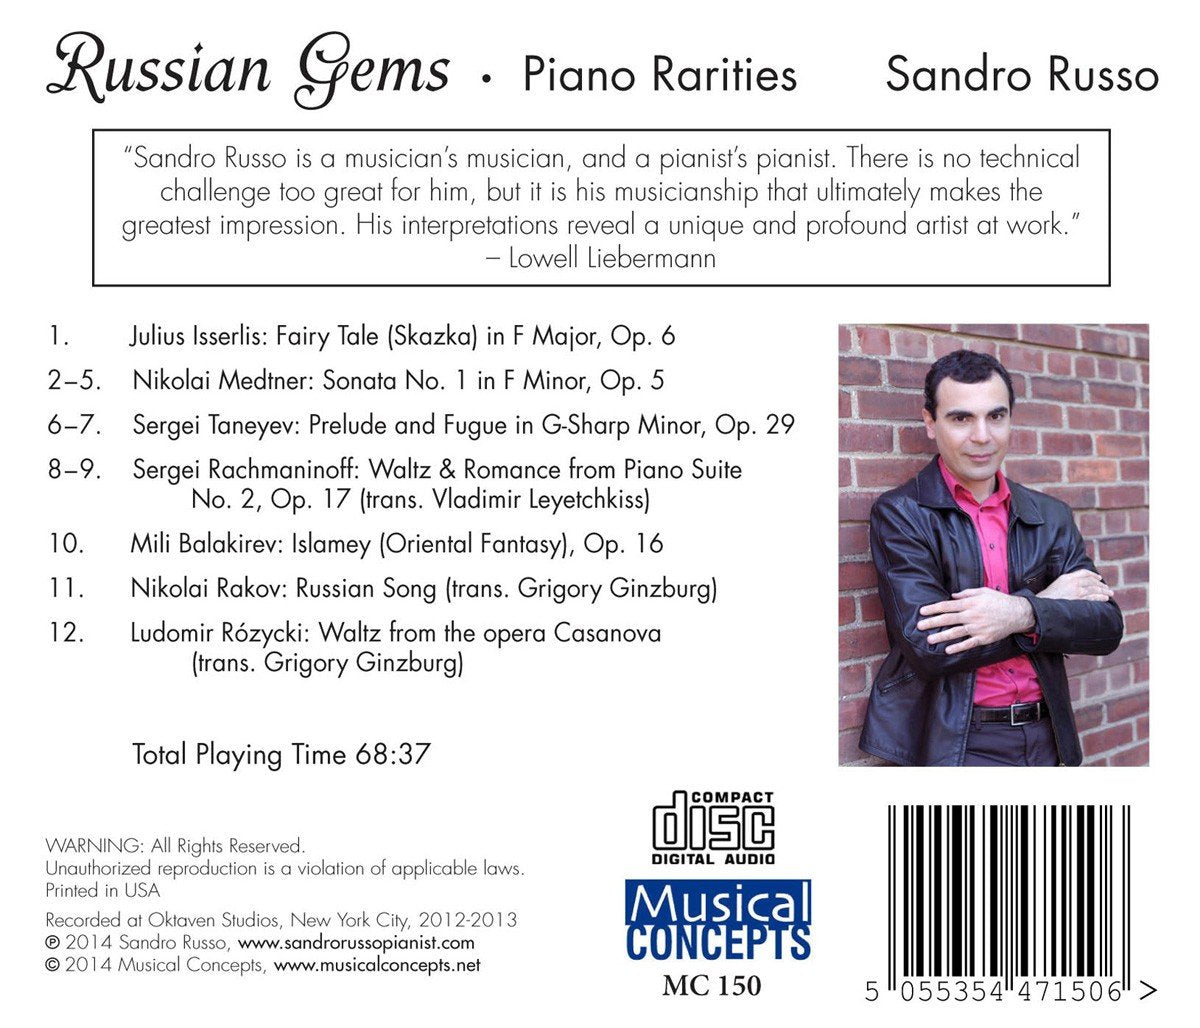 RUSSIAN GEMS: PIANO RARITIES - SANDRO RUSSO